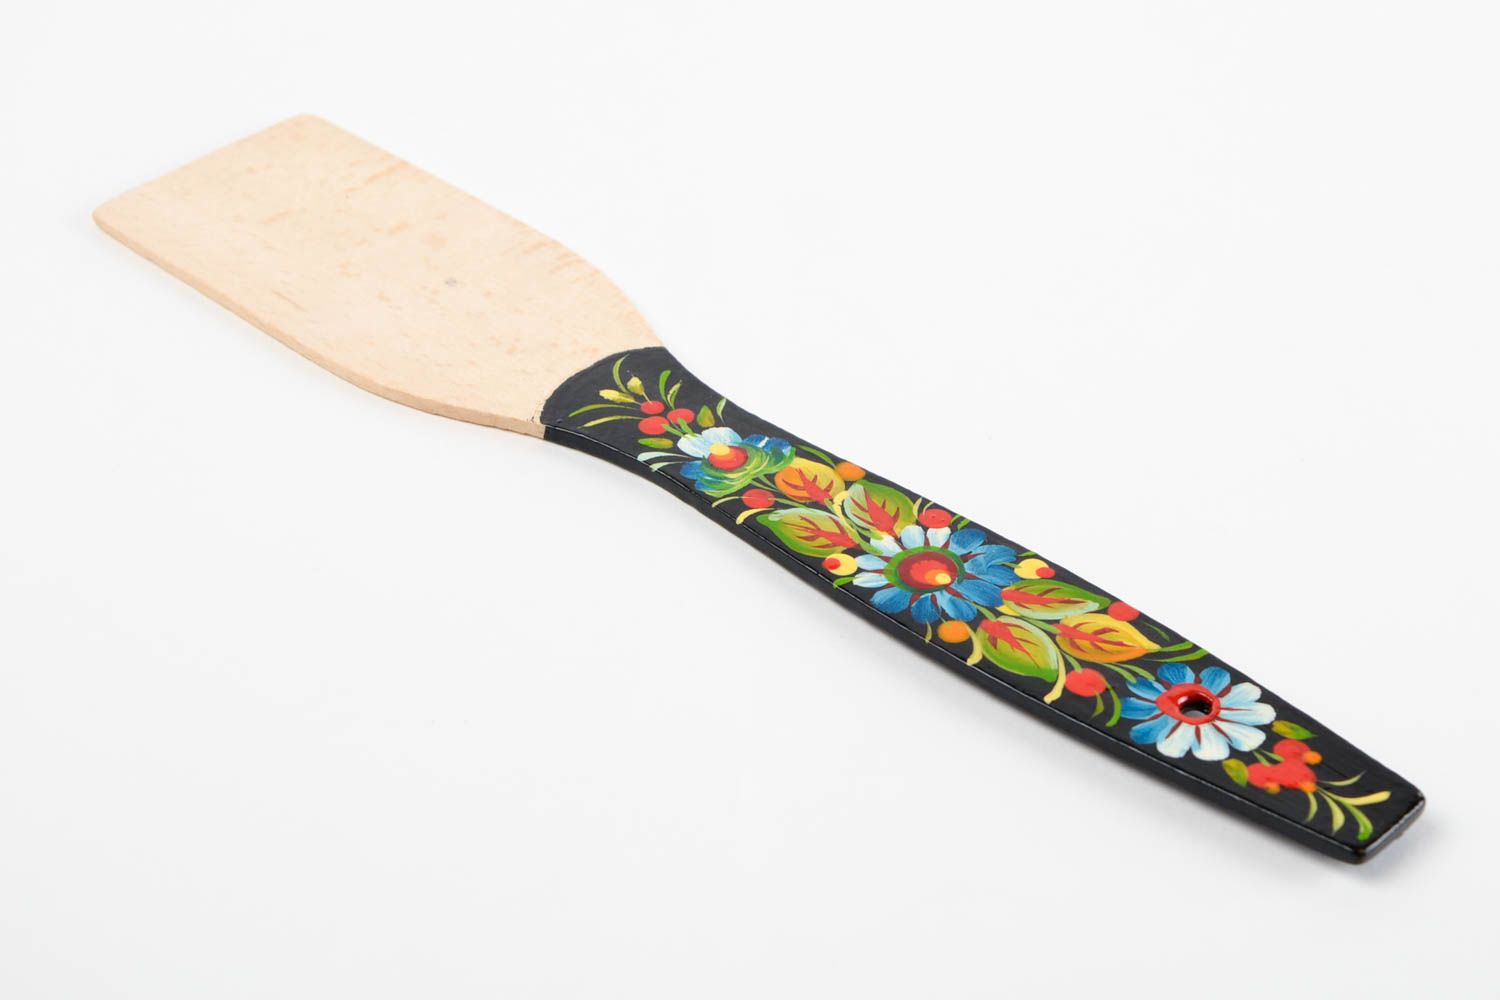 Handmade spatula designer spatula wooden kitchen utensils unusual gift ideas  photo 4